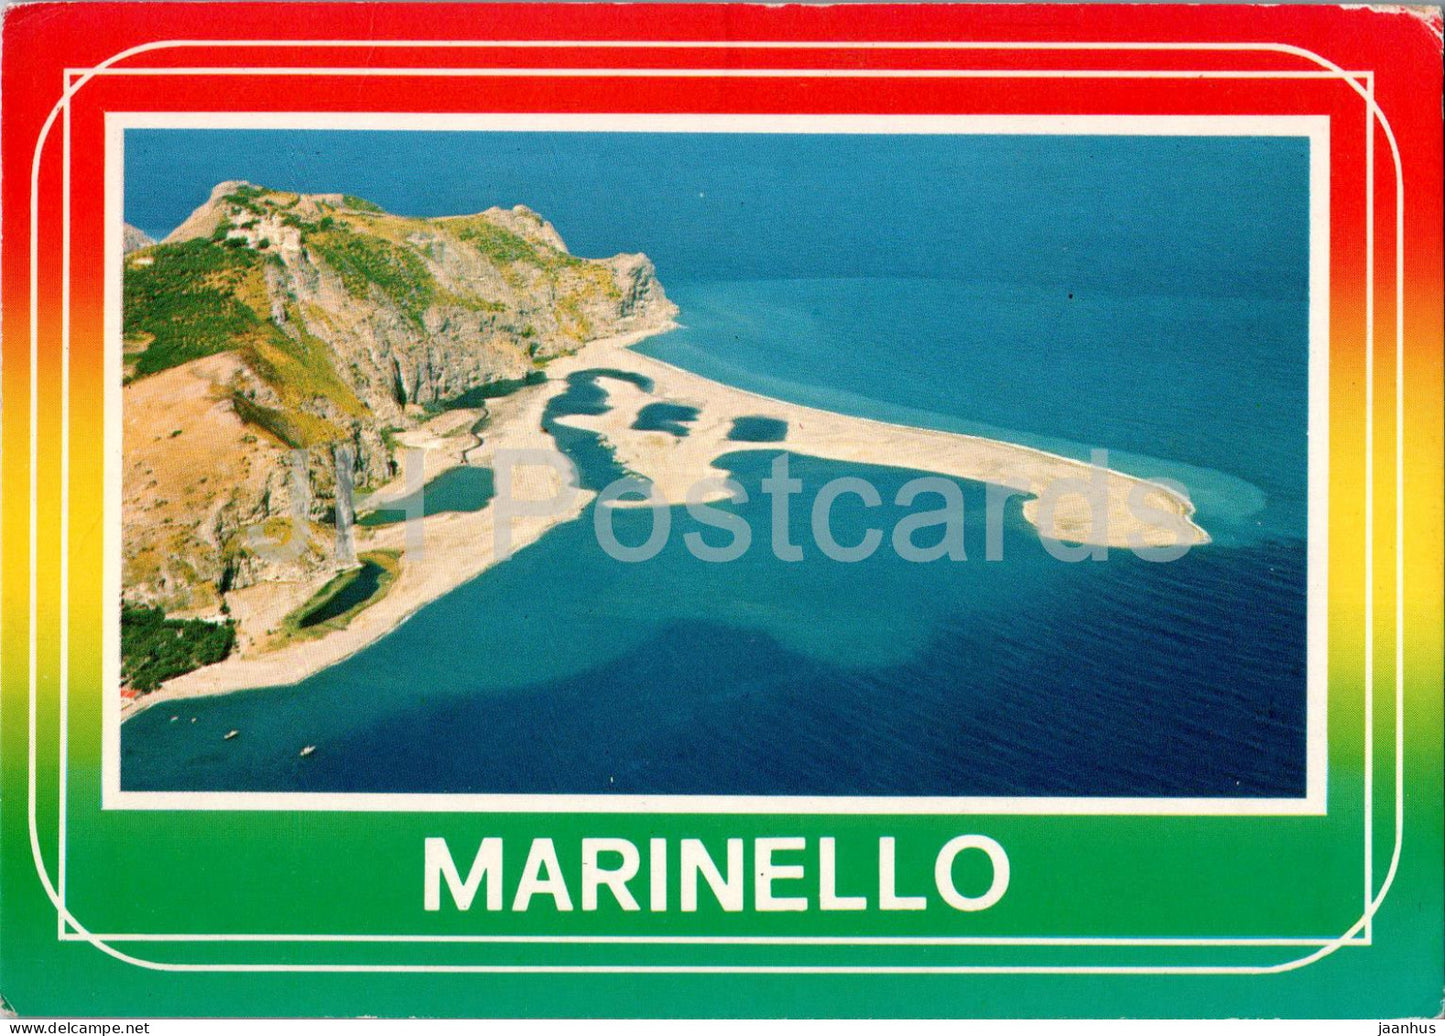 Marinello - Tindari - Veduta aerea del colle - Isole Eolie - Eolie isles - 590 - Italy - used - JH Postcards